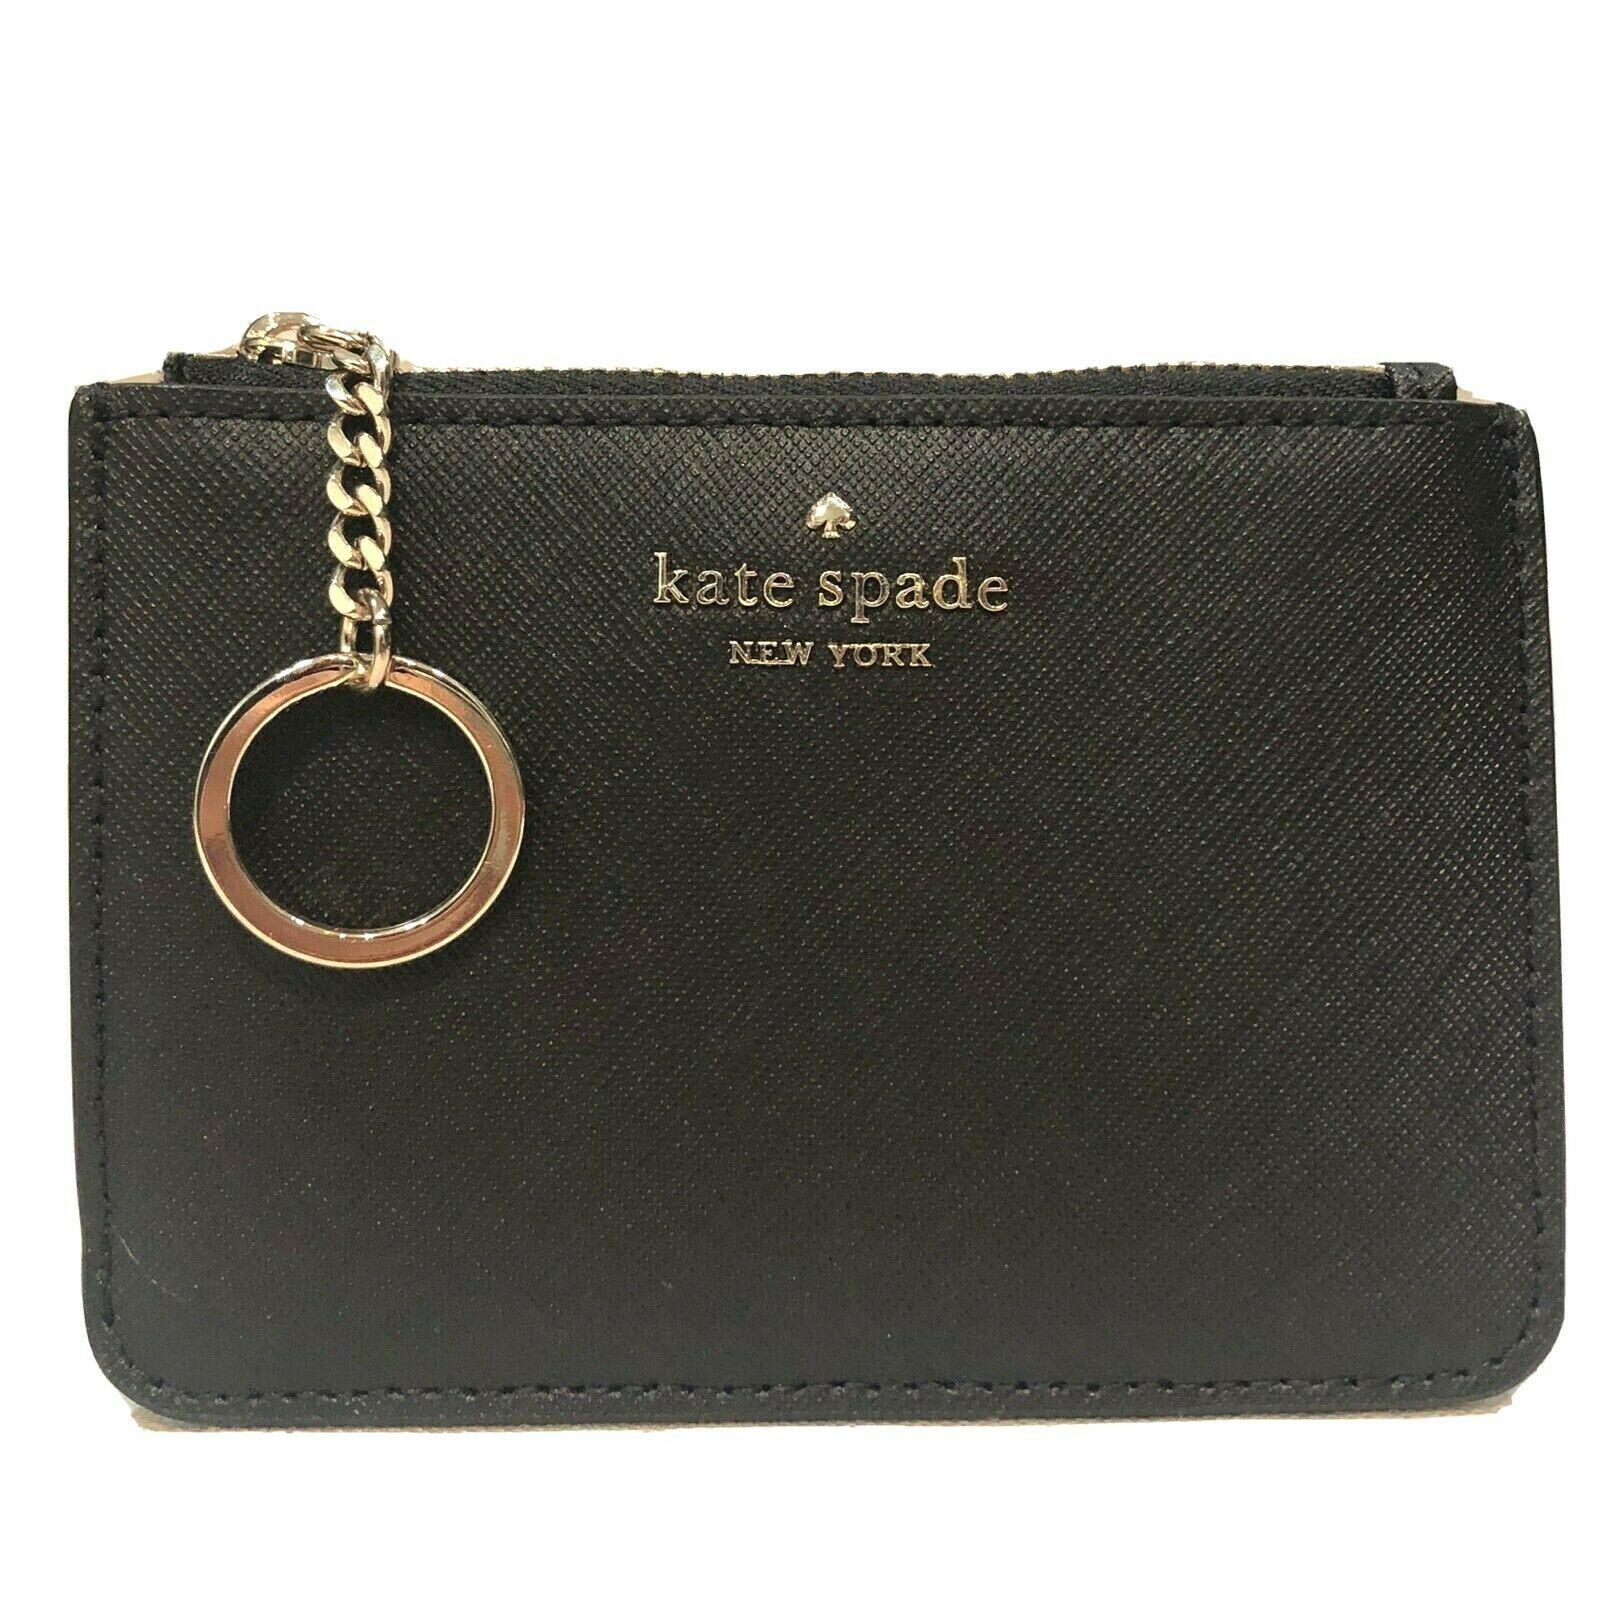 Kate Spade Brand - Shop Kate Spade fashion accessories | Fash 